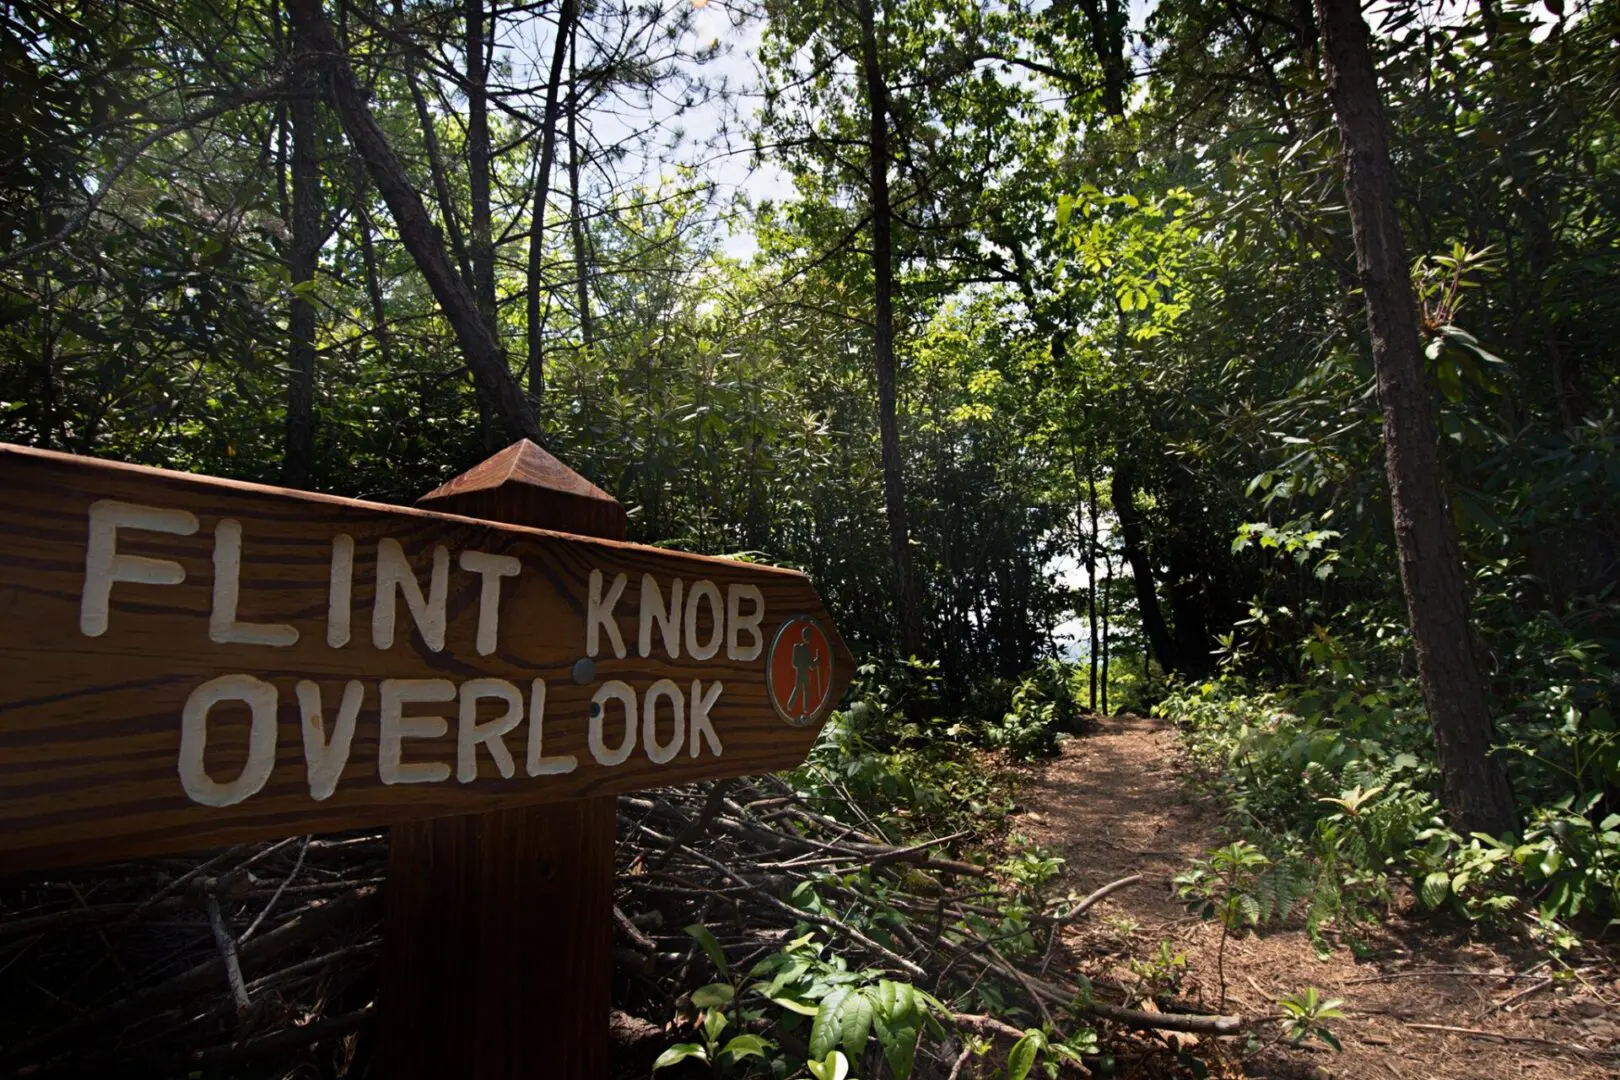 A sign that says " flint knob overlook ".